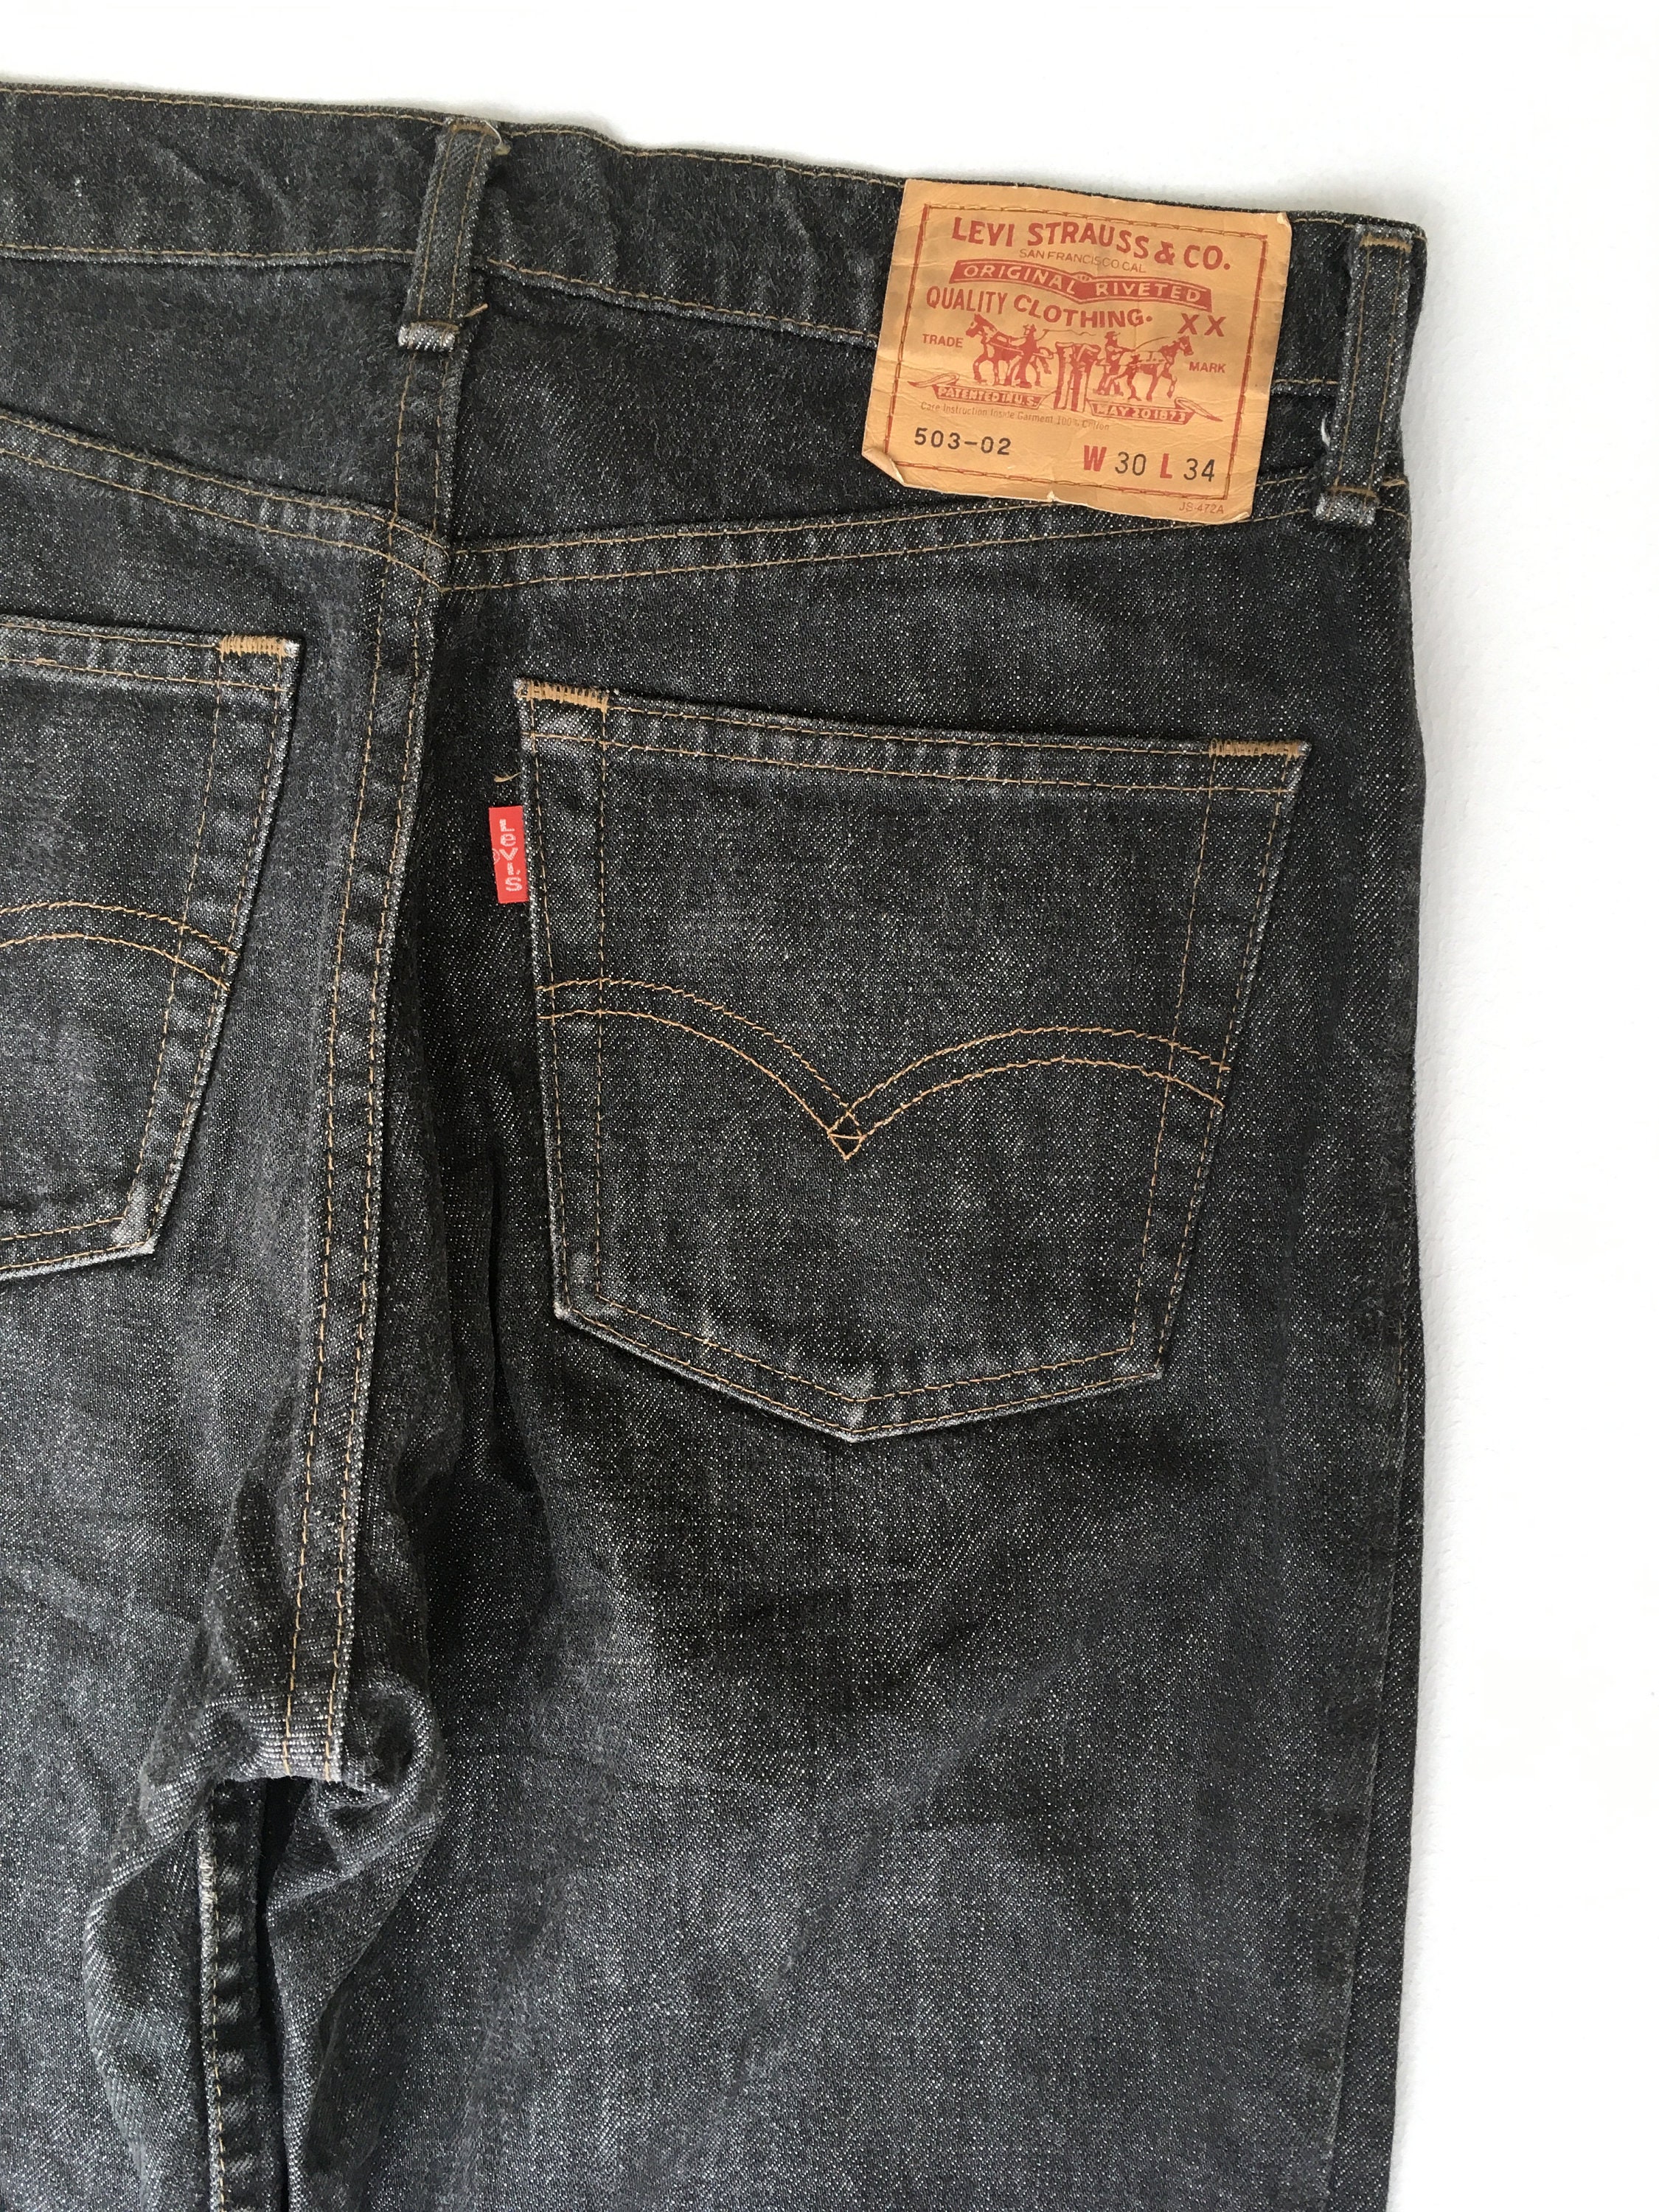 Size  Vintage Levis 503 Dark Black Jeans Straigh Leg - Etsy